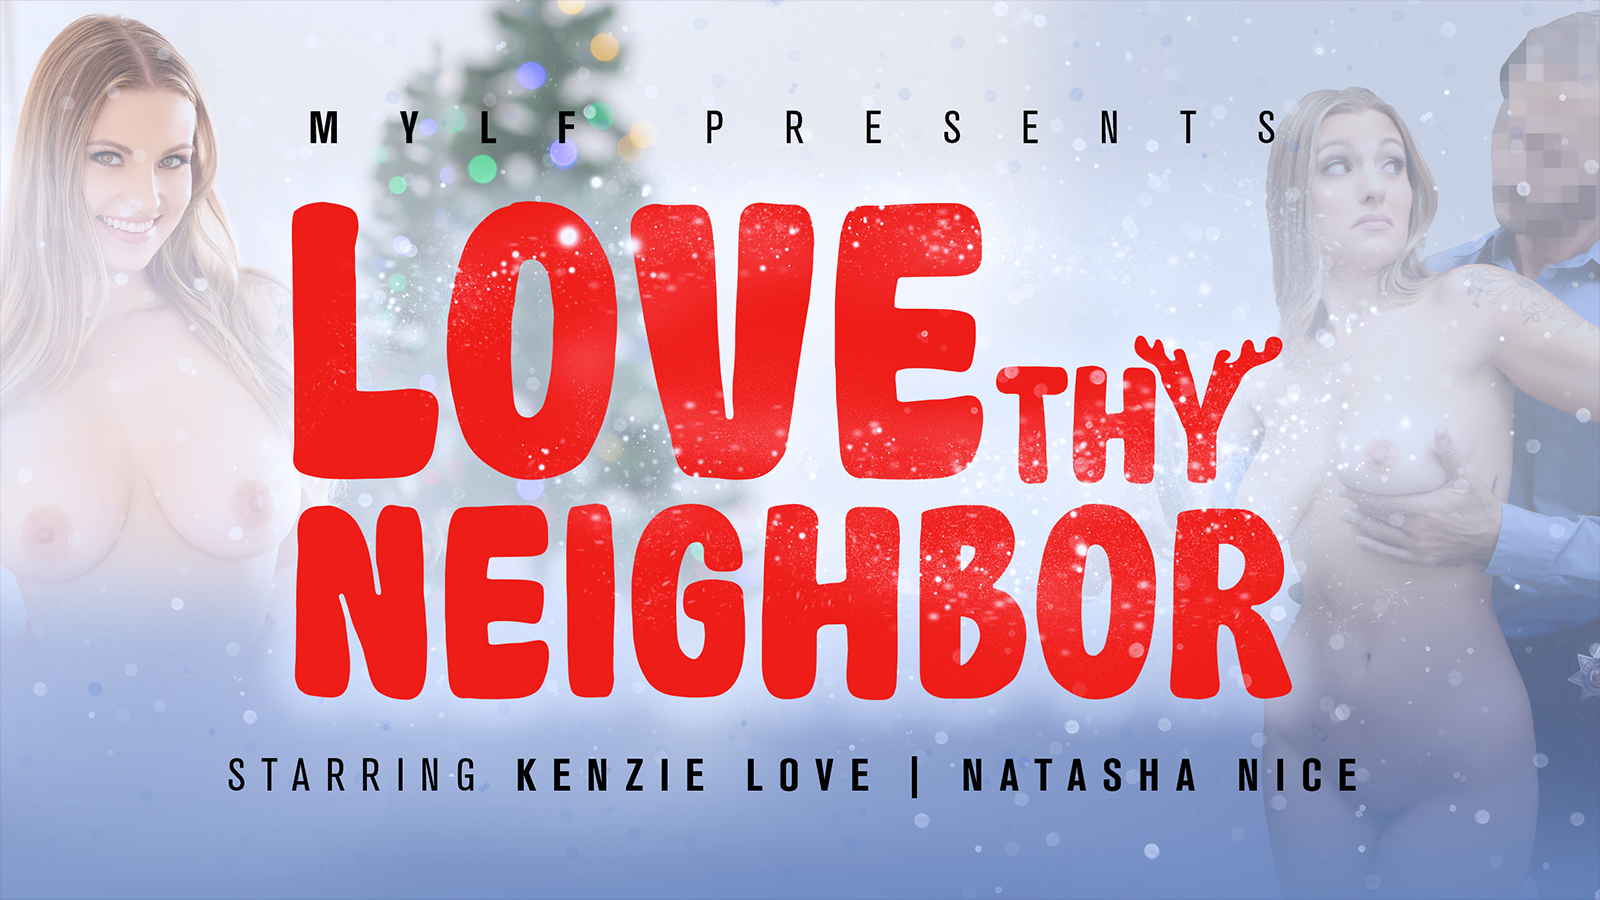 Kenzie love - love thy neighbor